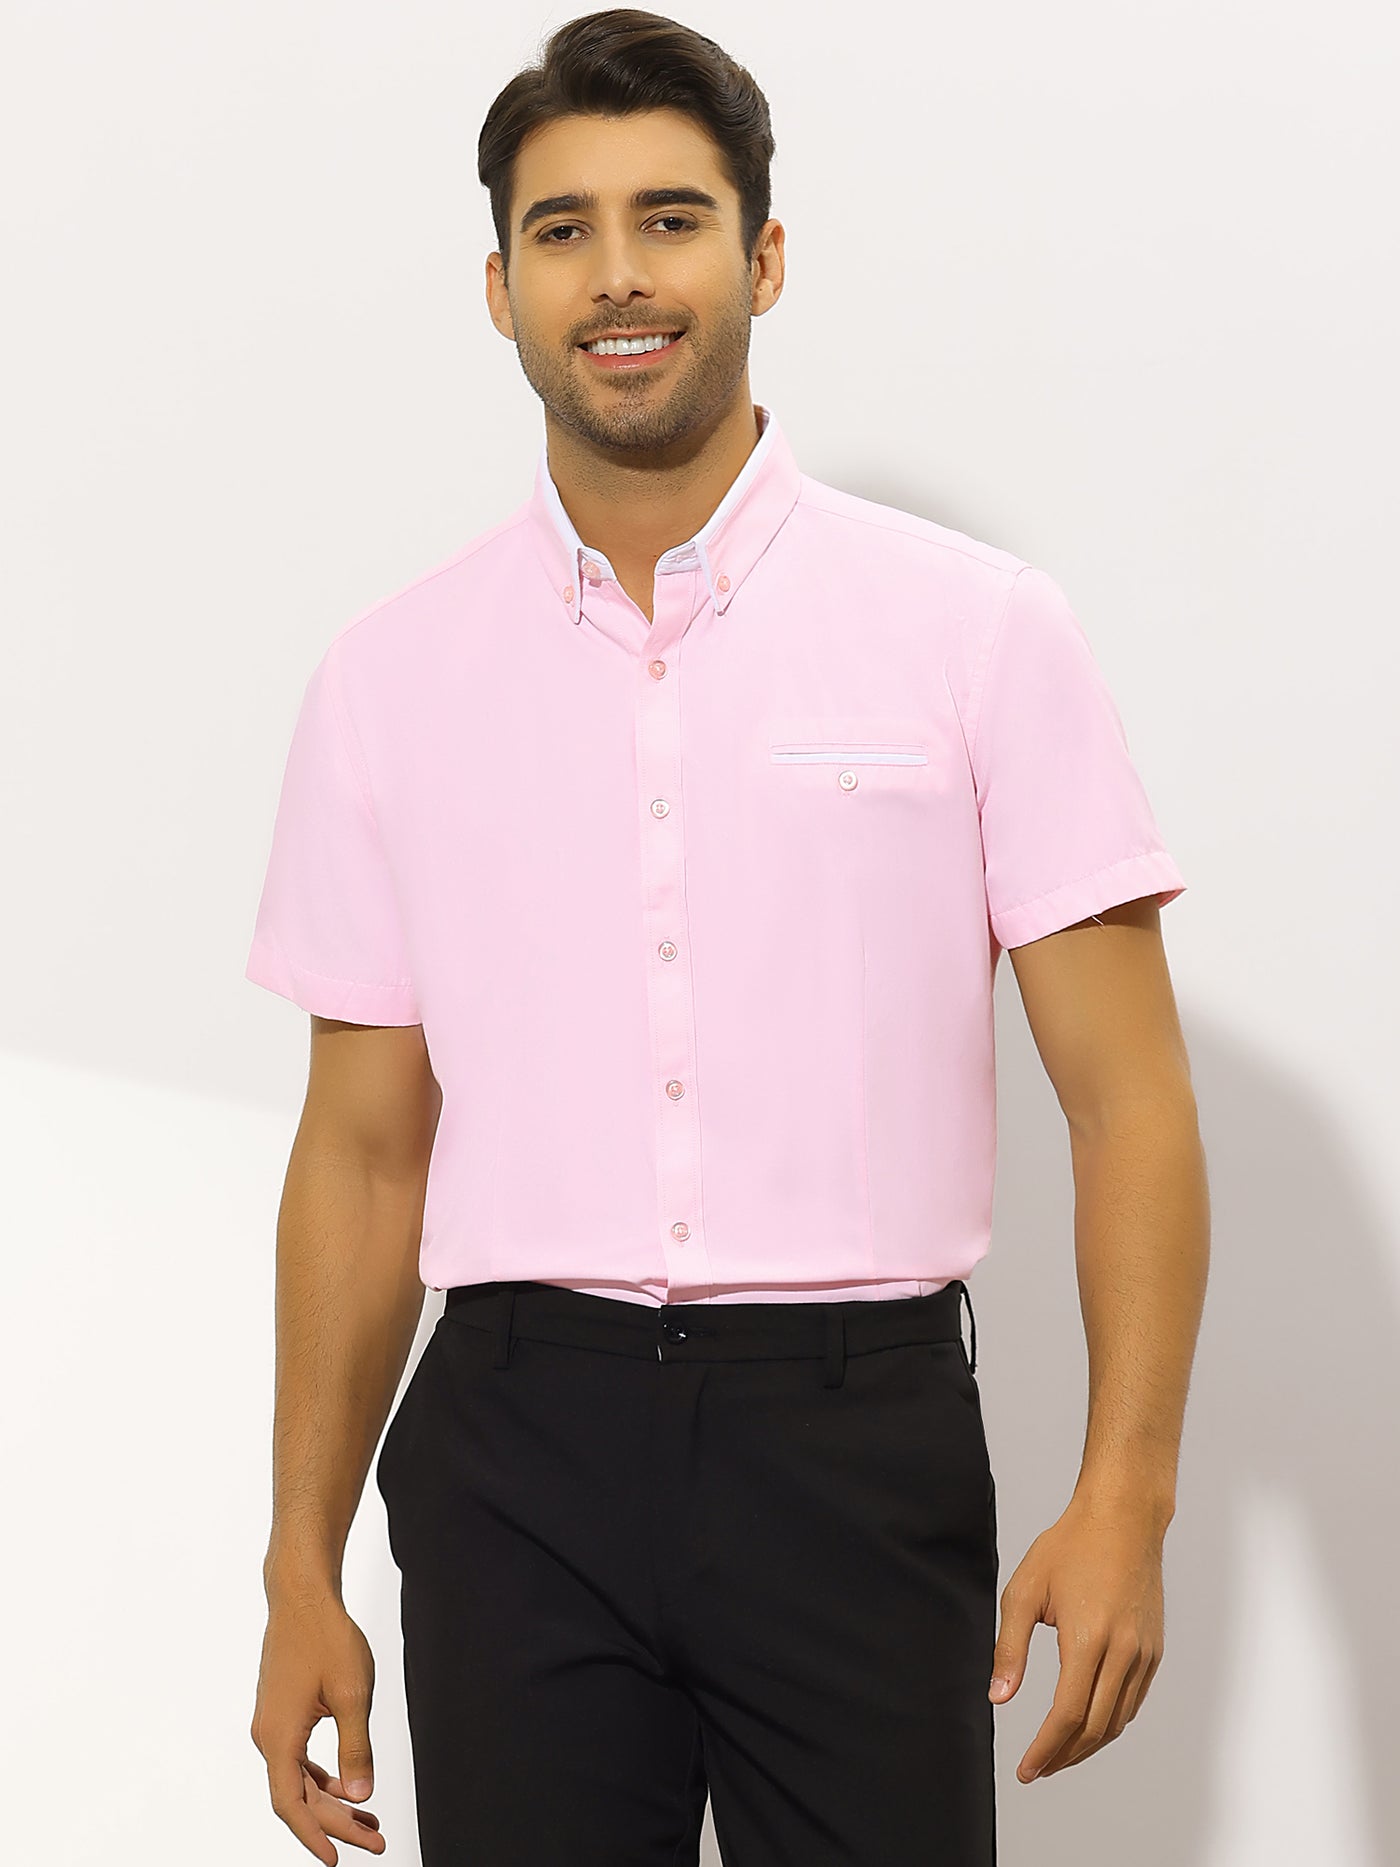 Bublédon Men's Regular Fit Contrast Collar Button Down Short Sleeves Shirts